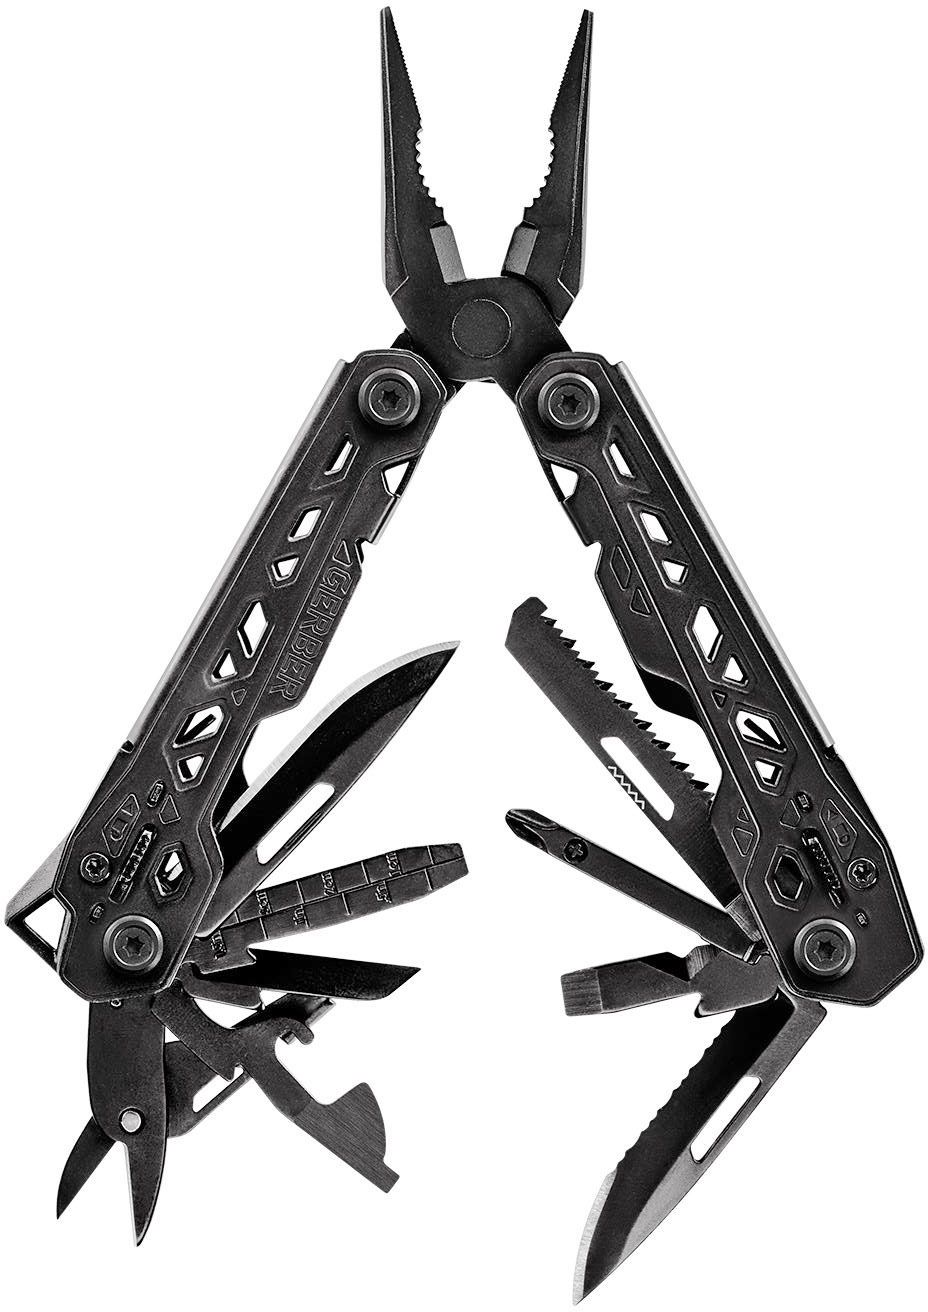 Gerber Suspension-nxt 15 Tool Multi-tool Spring Loaded Survival for sale online